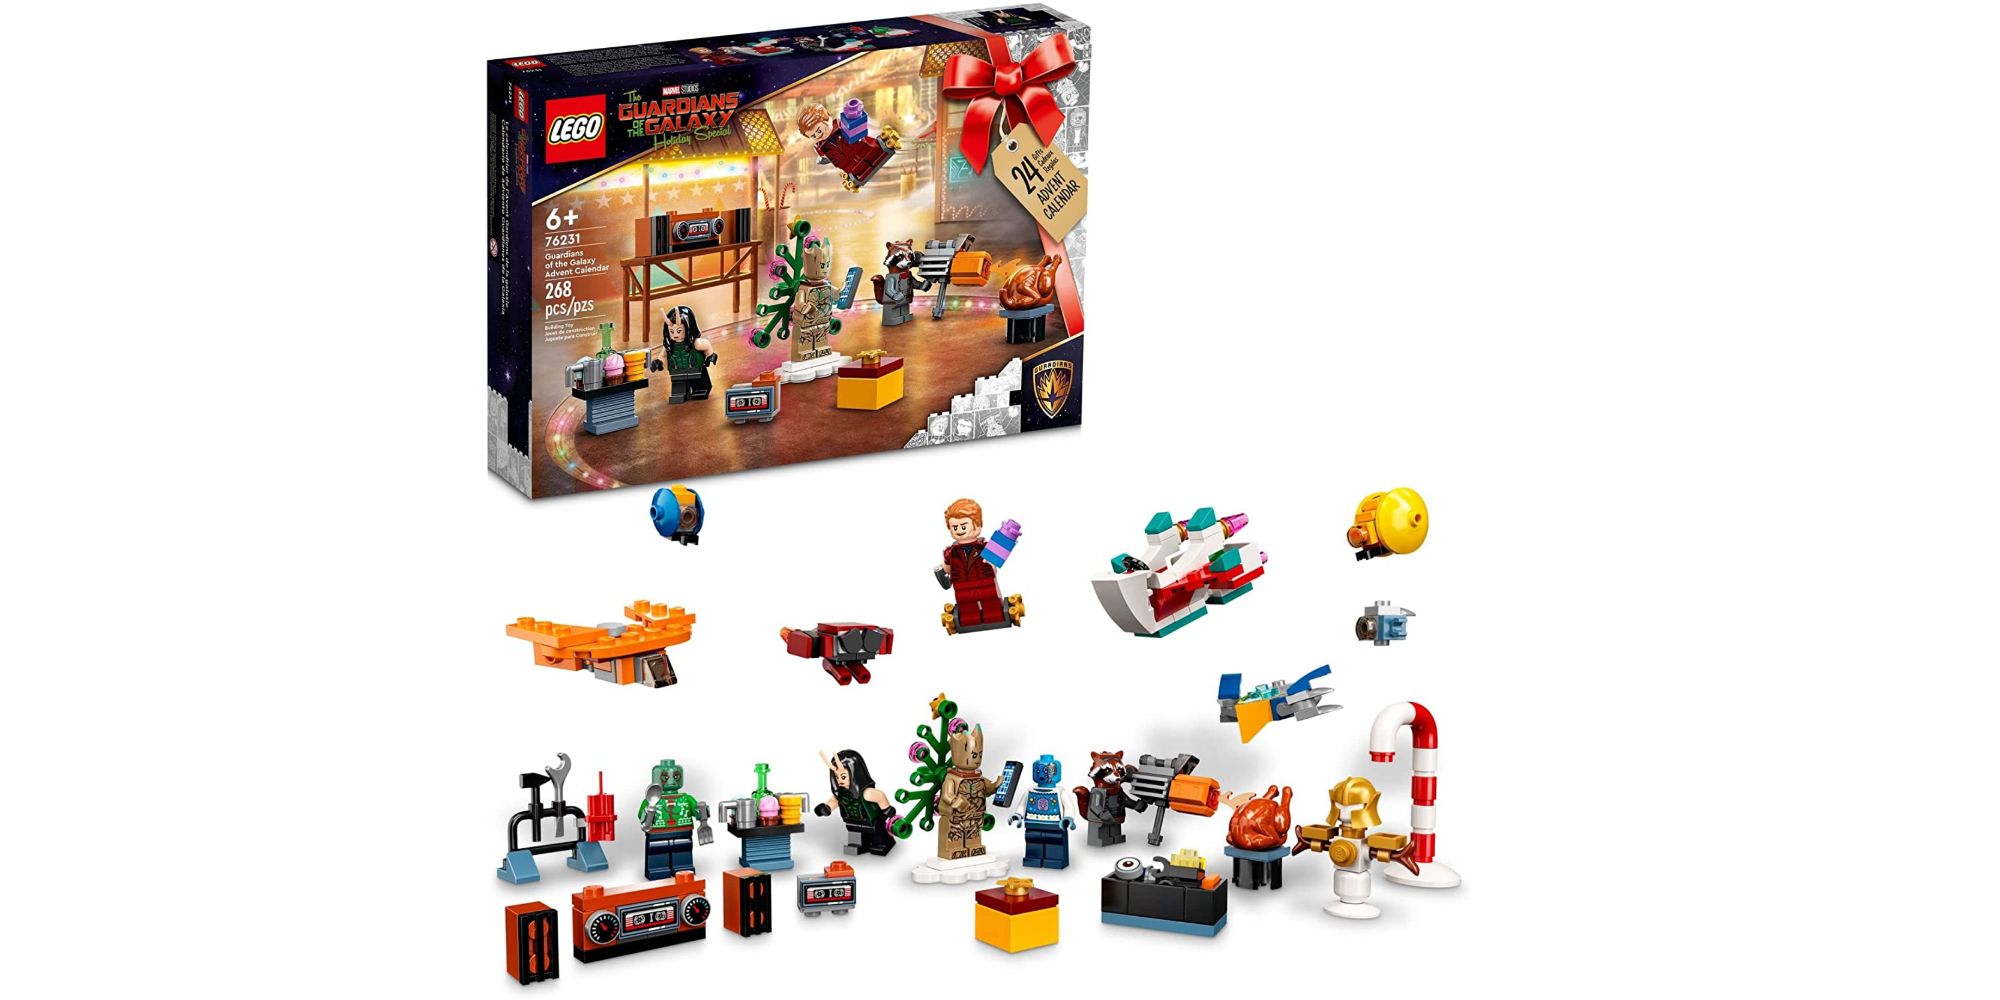 Lego Guardians of the Galaxy Advent Calendar da Amazon